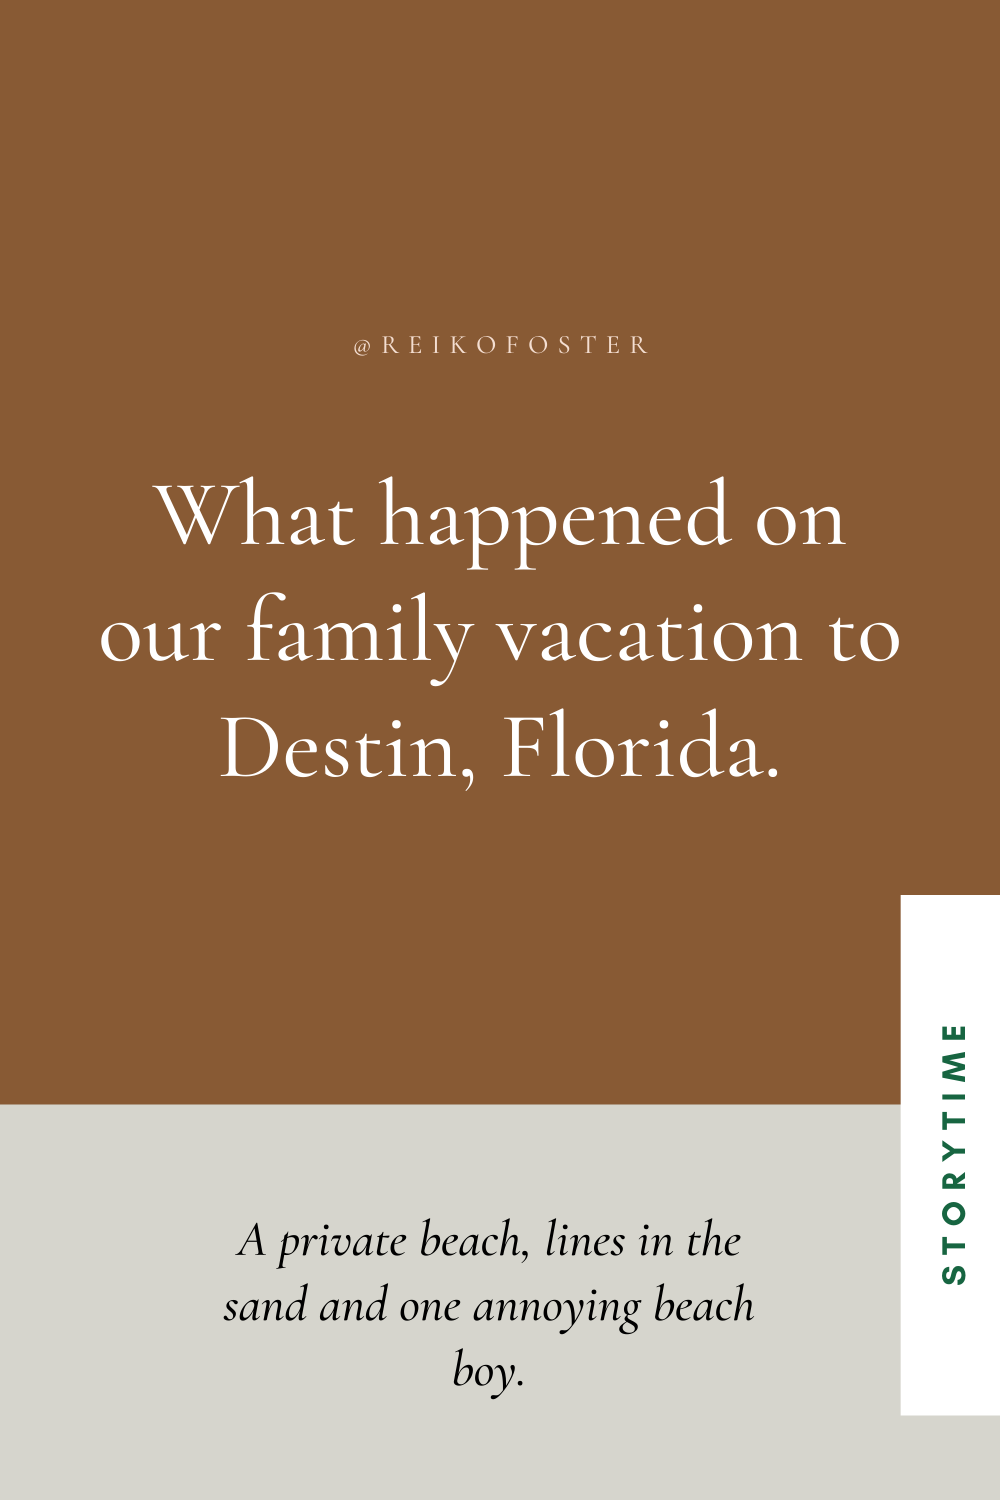 Our family vacation to Destin, Florida.